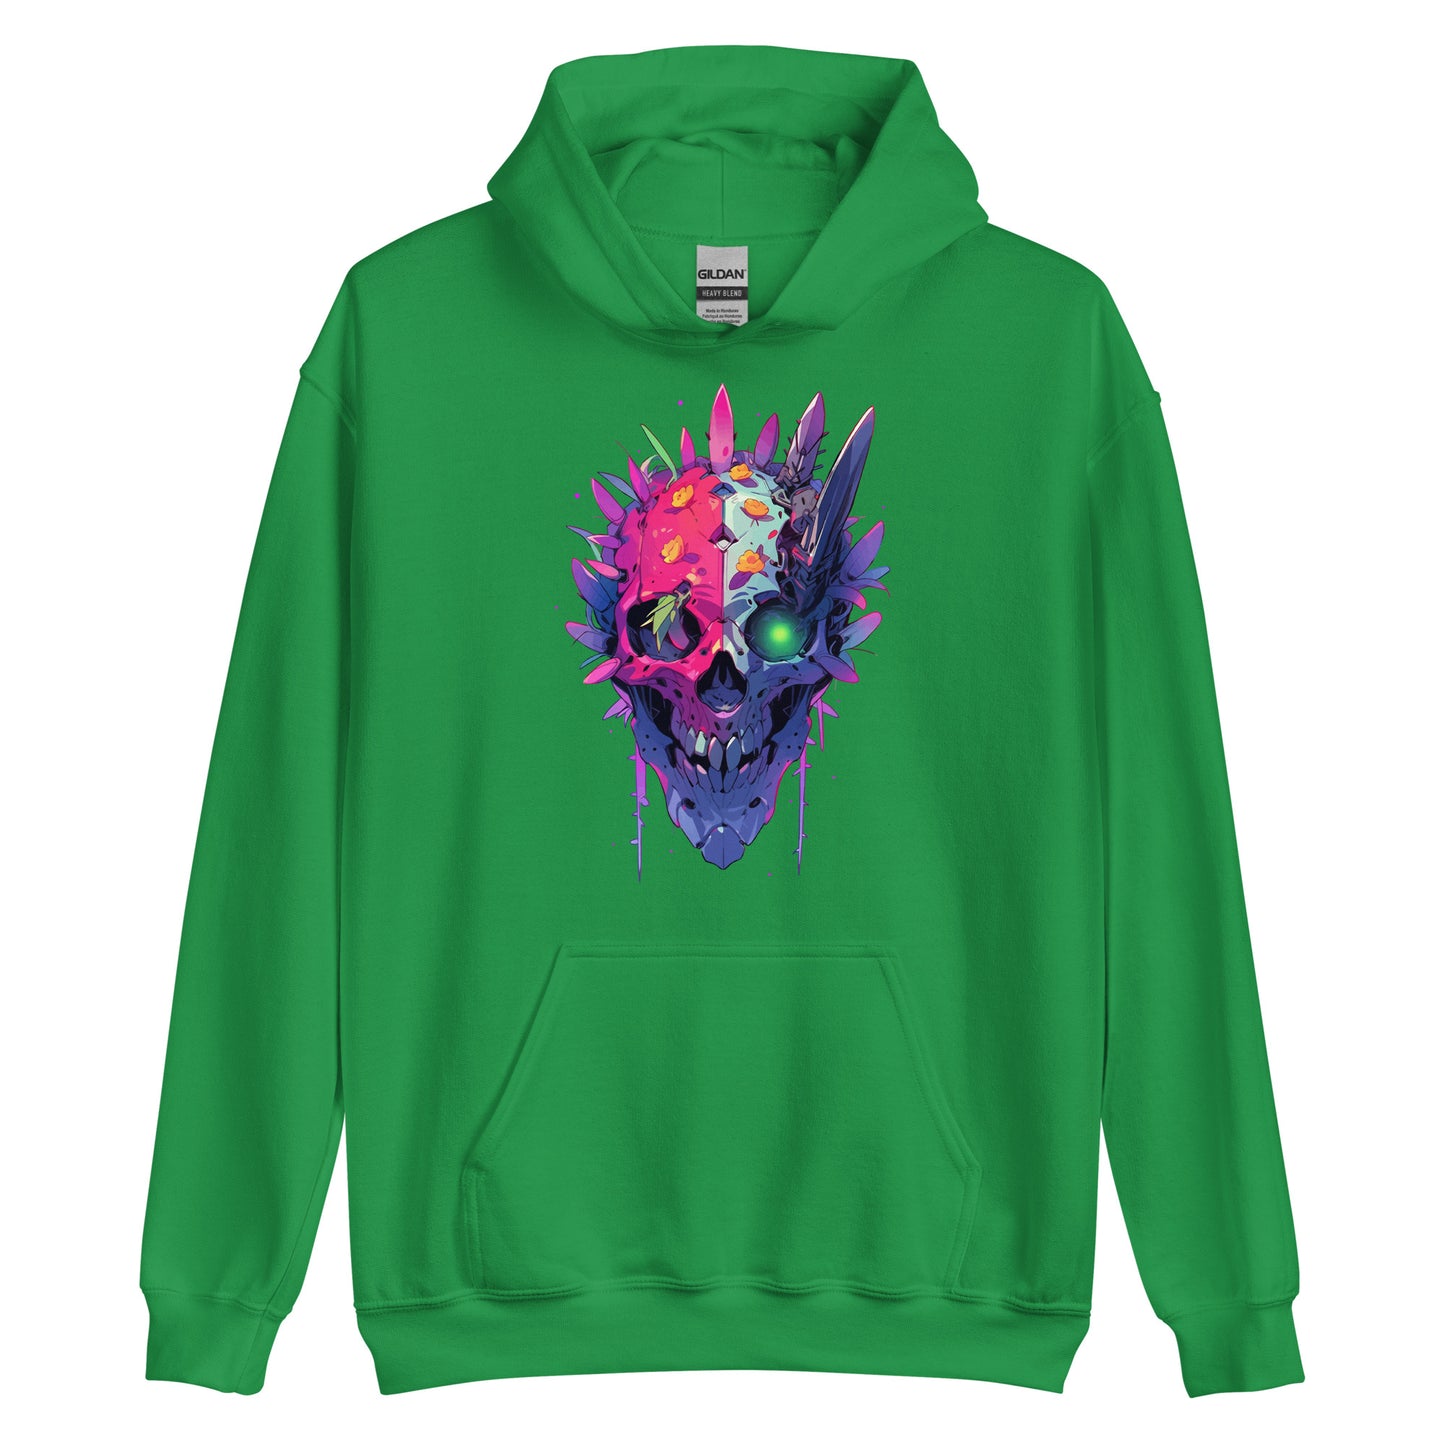 Fantastic head, Cactus skull smiling, Mutant with green eye, Pop Art fantasy monster - Unisex Hoodie